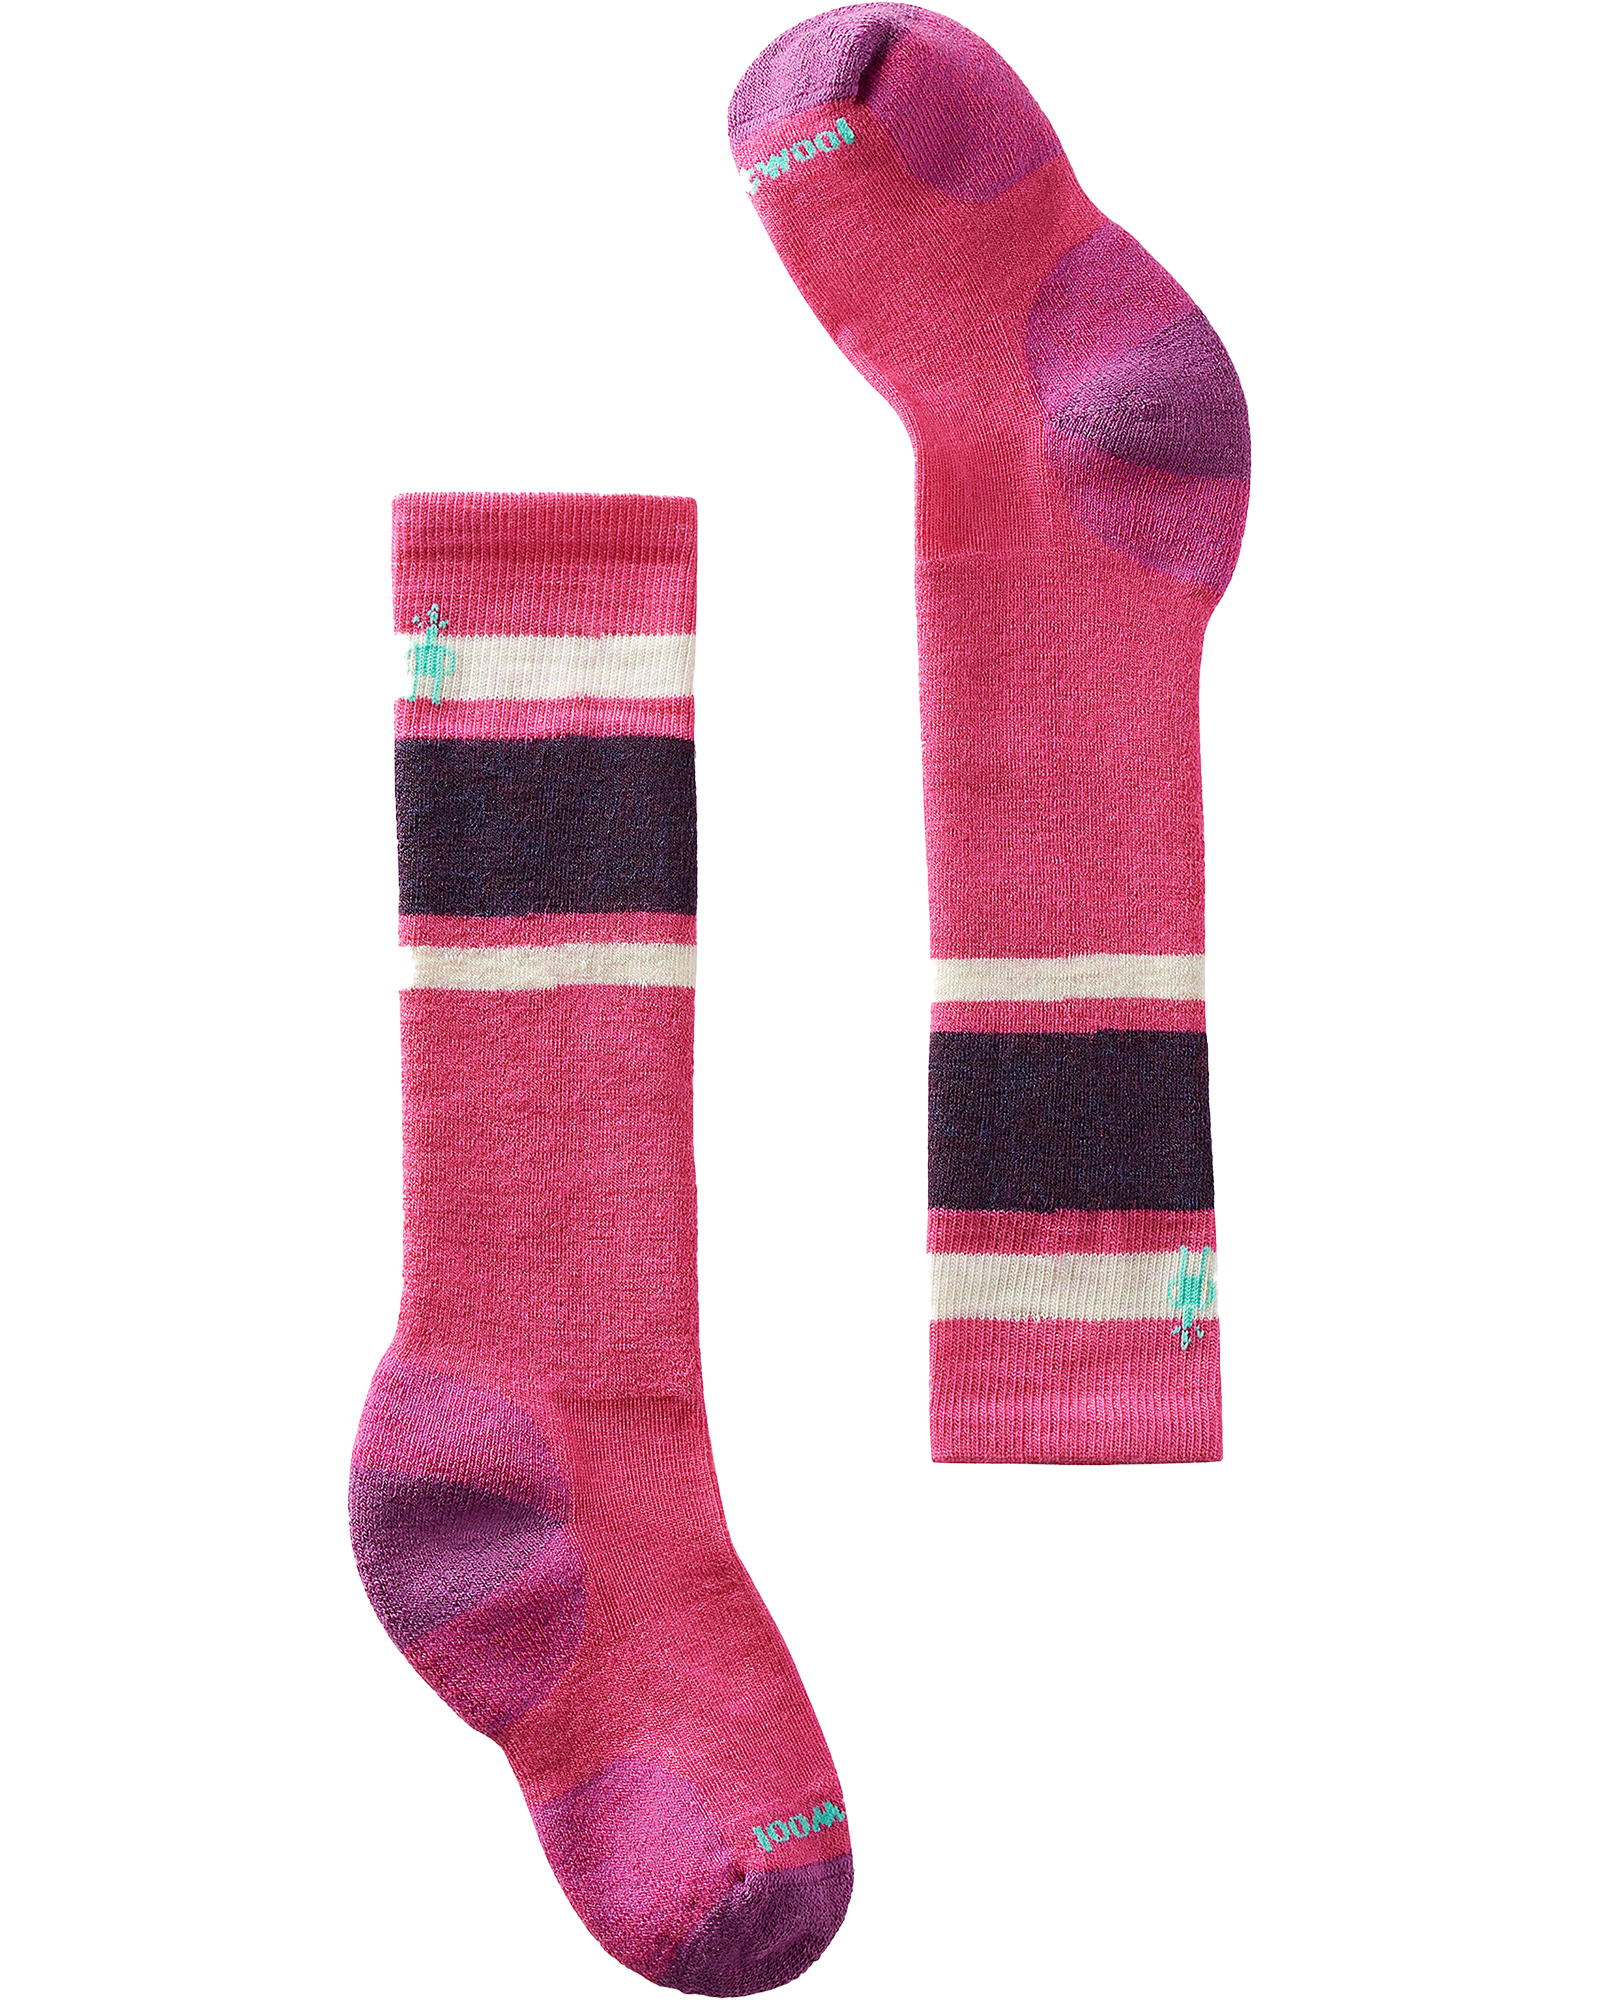 Smartwool Wintersport Full Cushion Kids’ Socks - Power Pink M